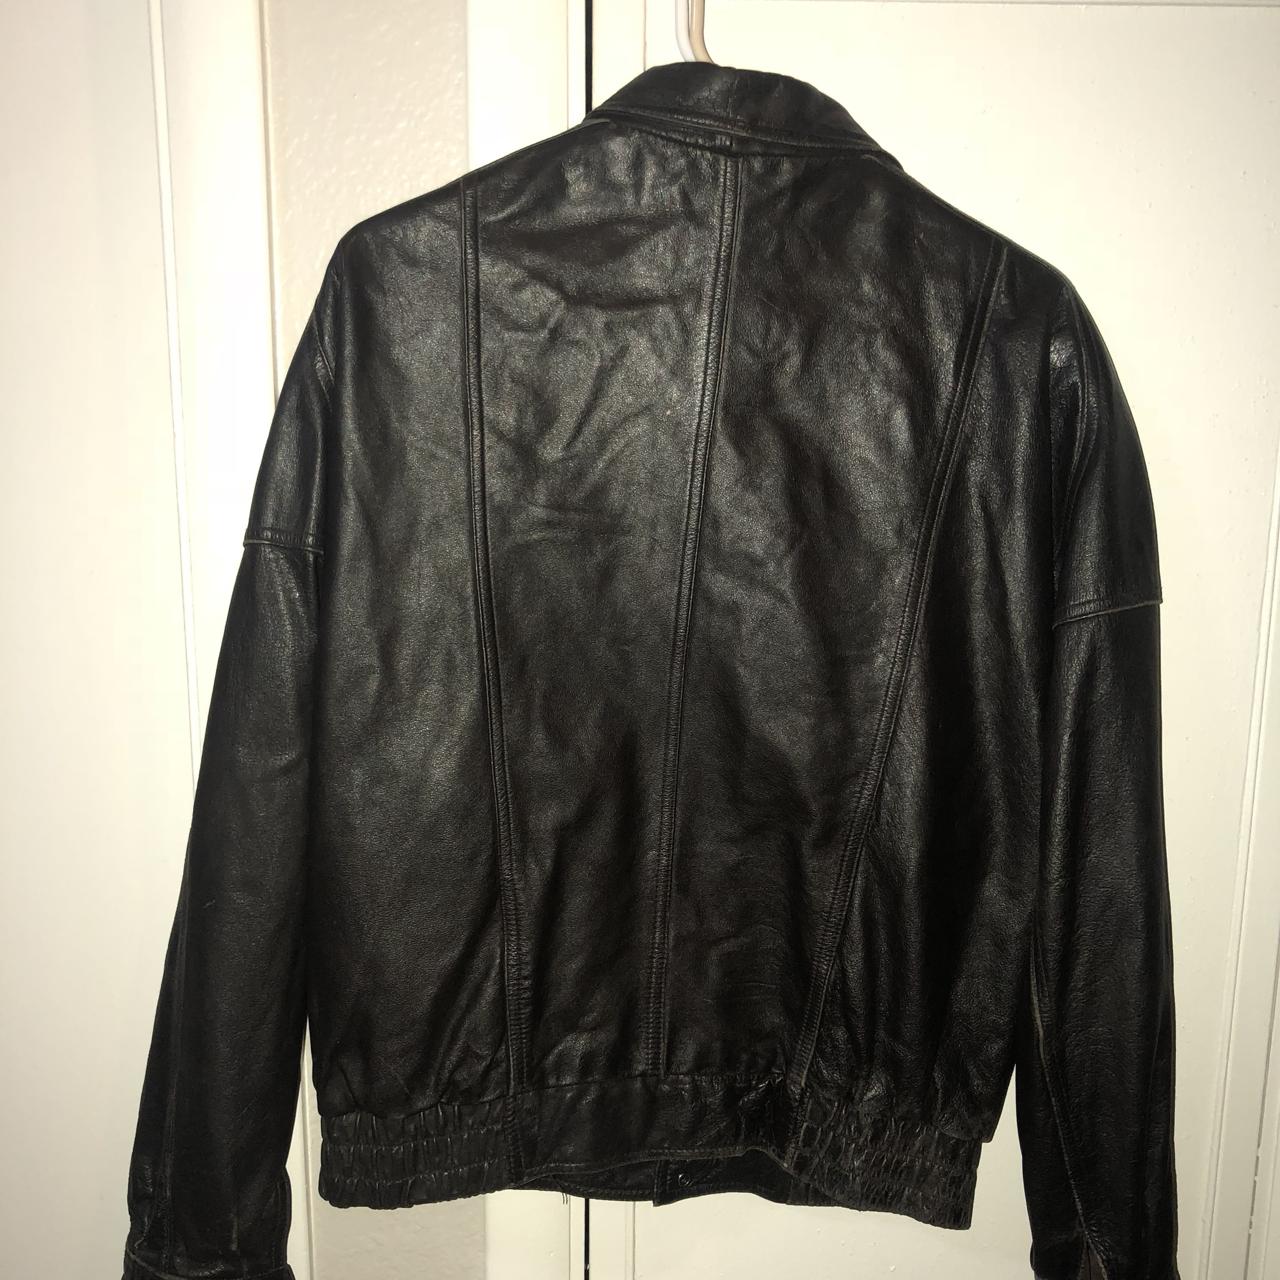 Vintage Leather Jacket, fits like a L-XL - Depop